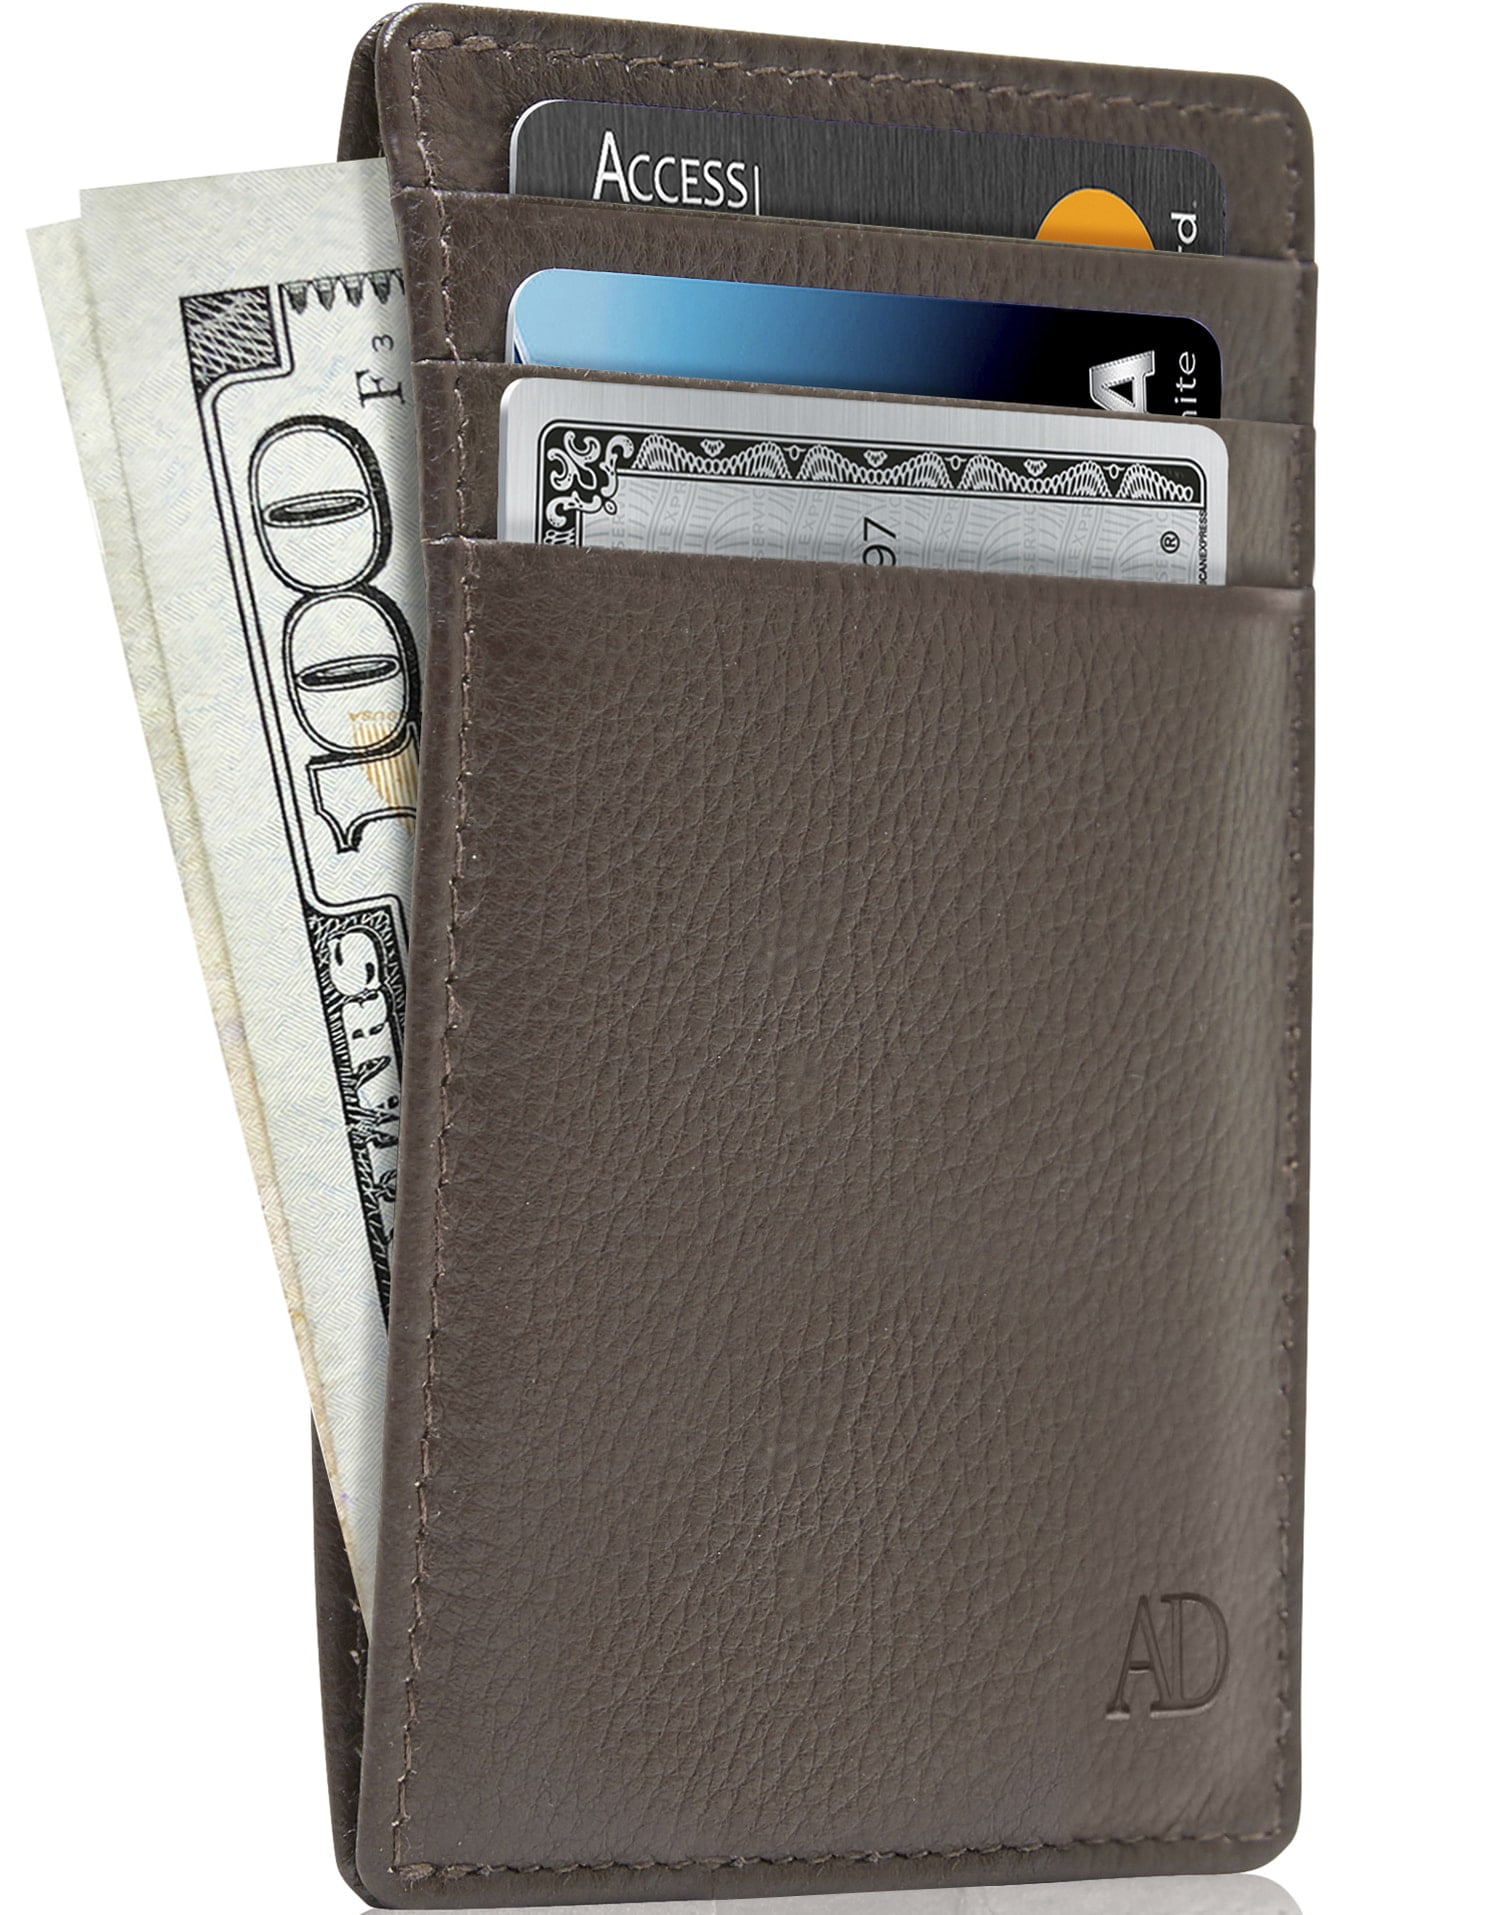 Slim Minimalist Wallets For Men & Women - Genuine Leather Credit Card ...